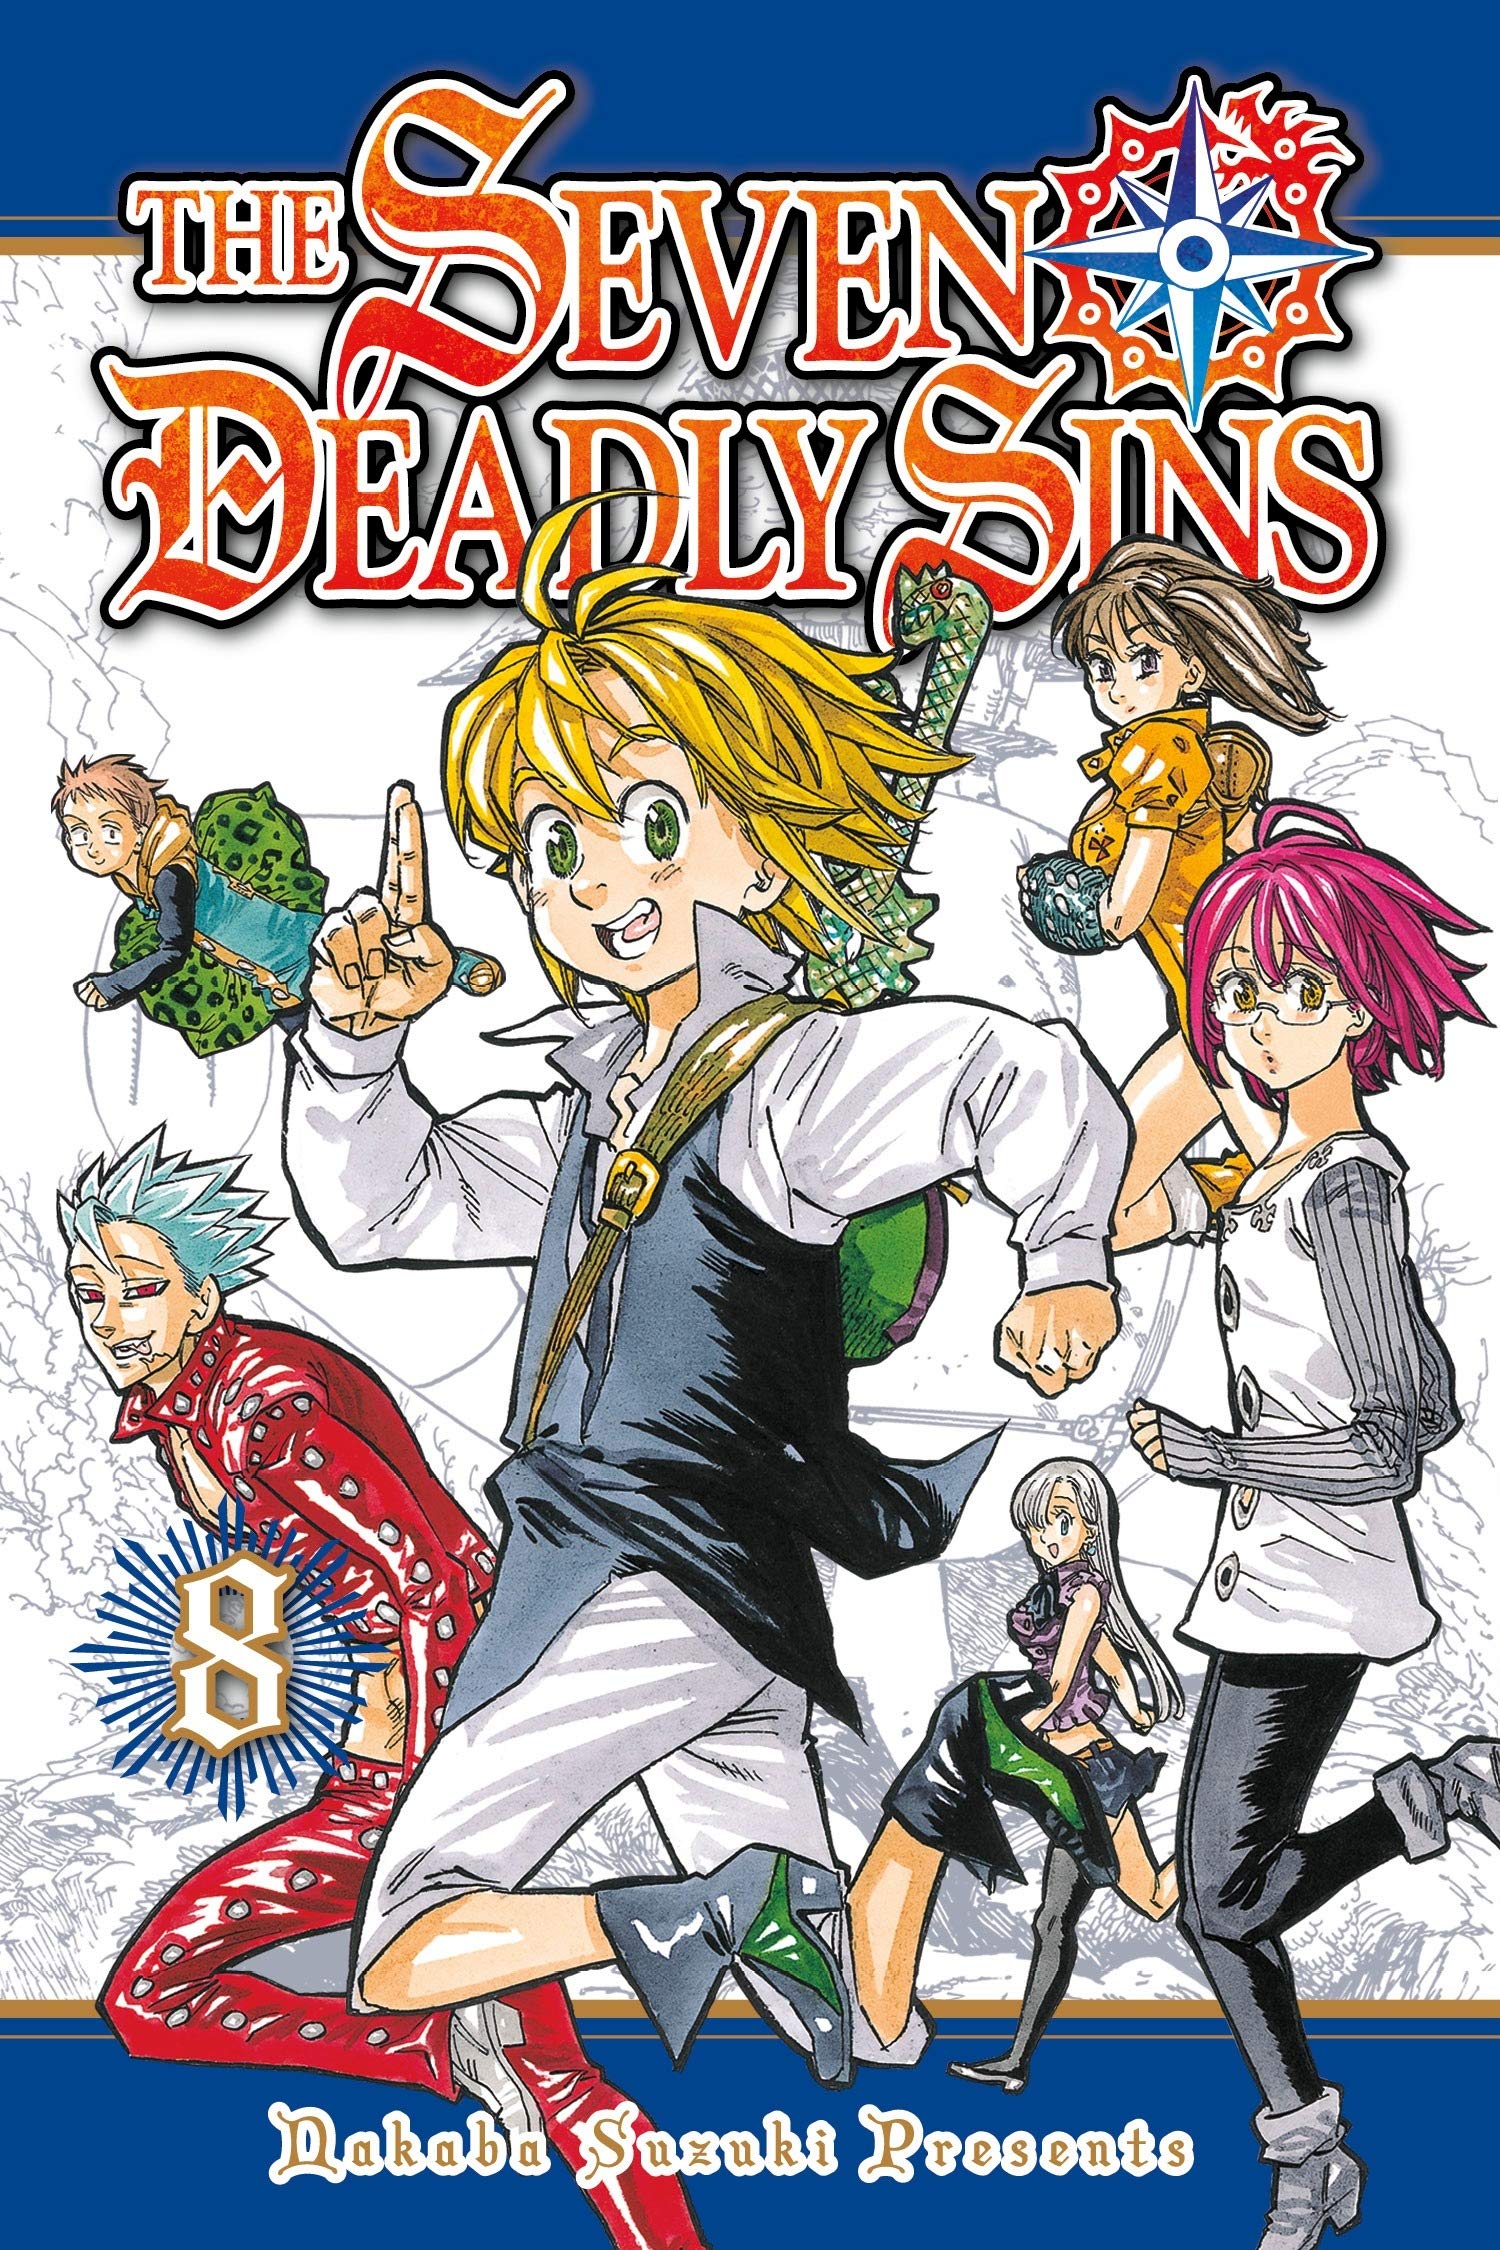 The Seven Deadly Sins - Volume 8